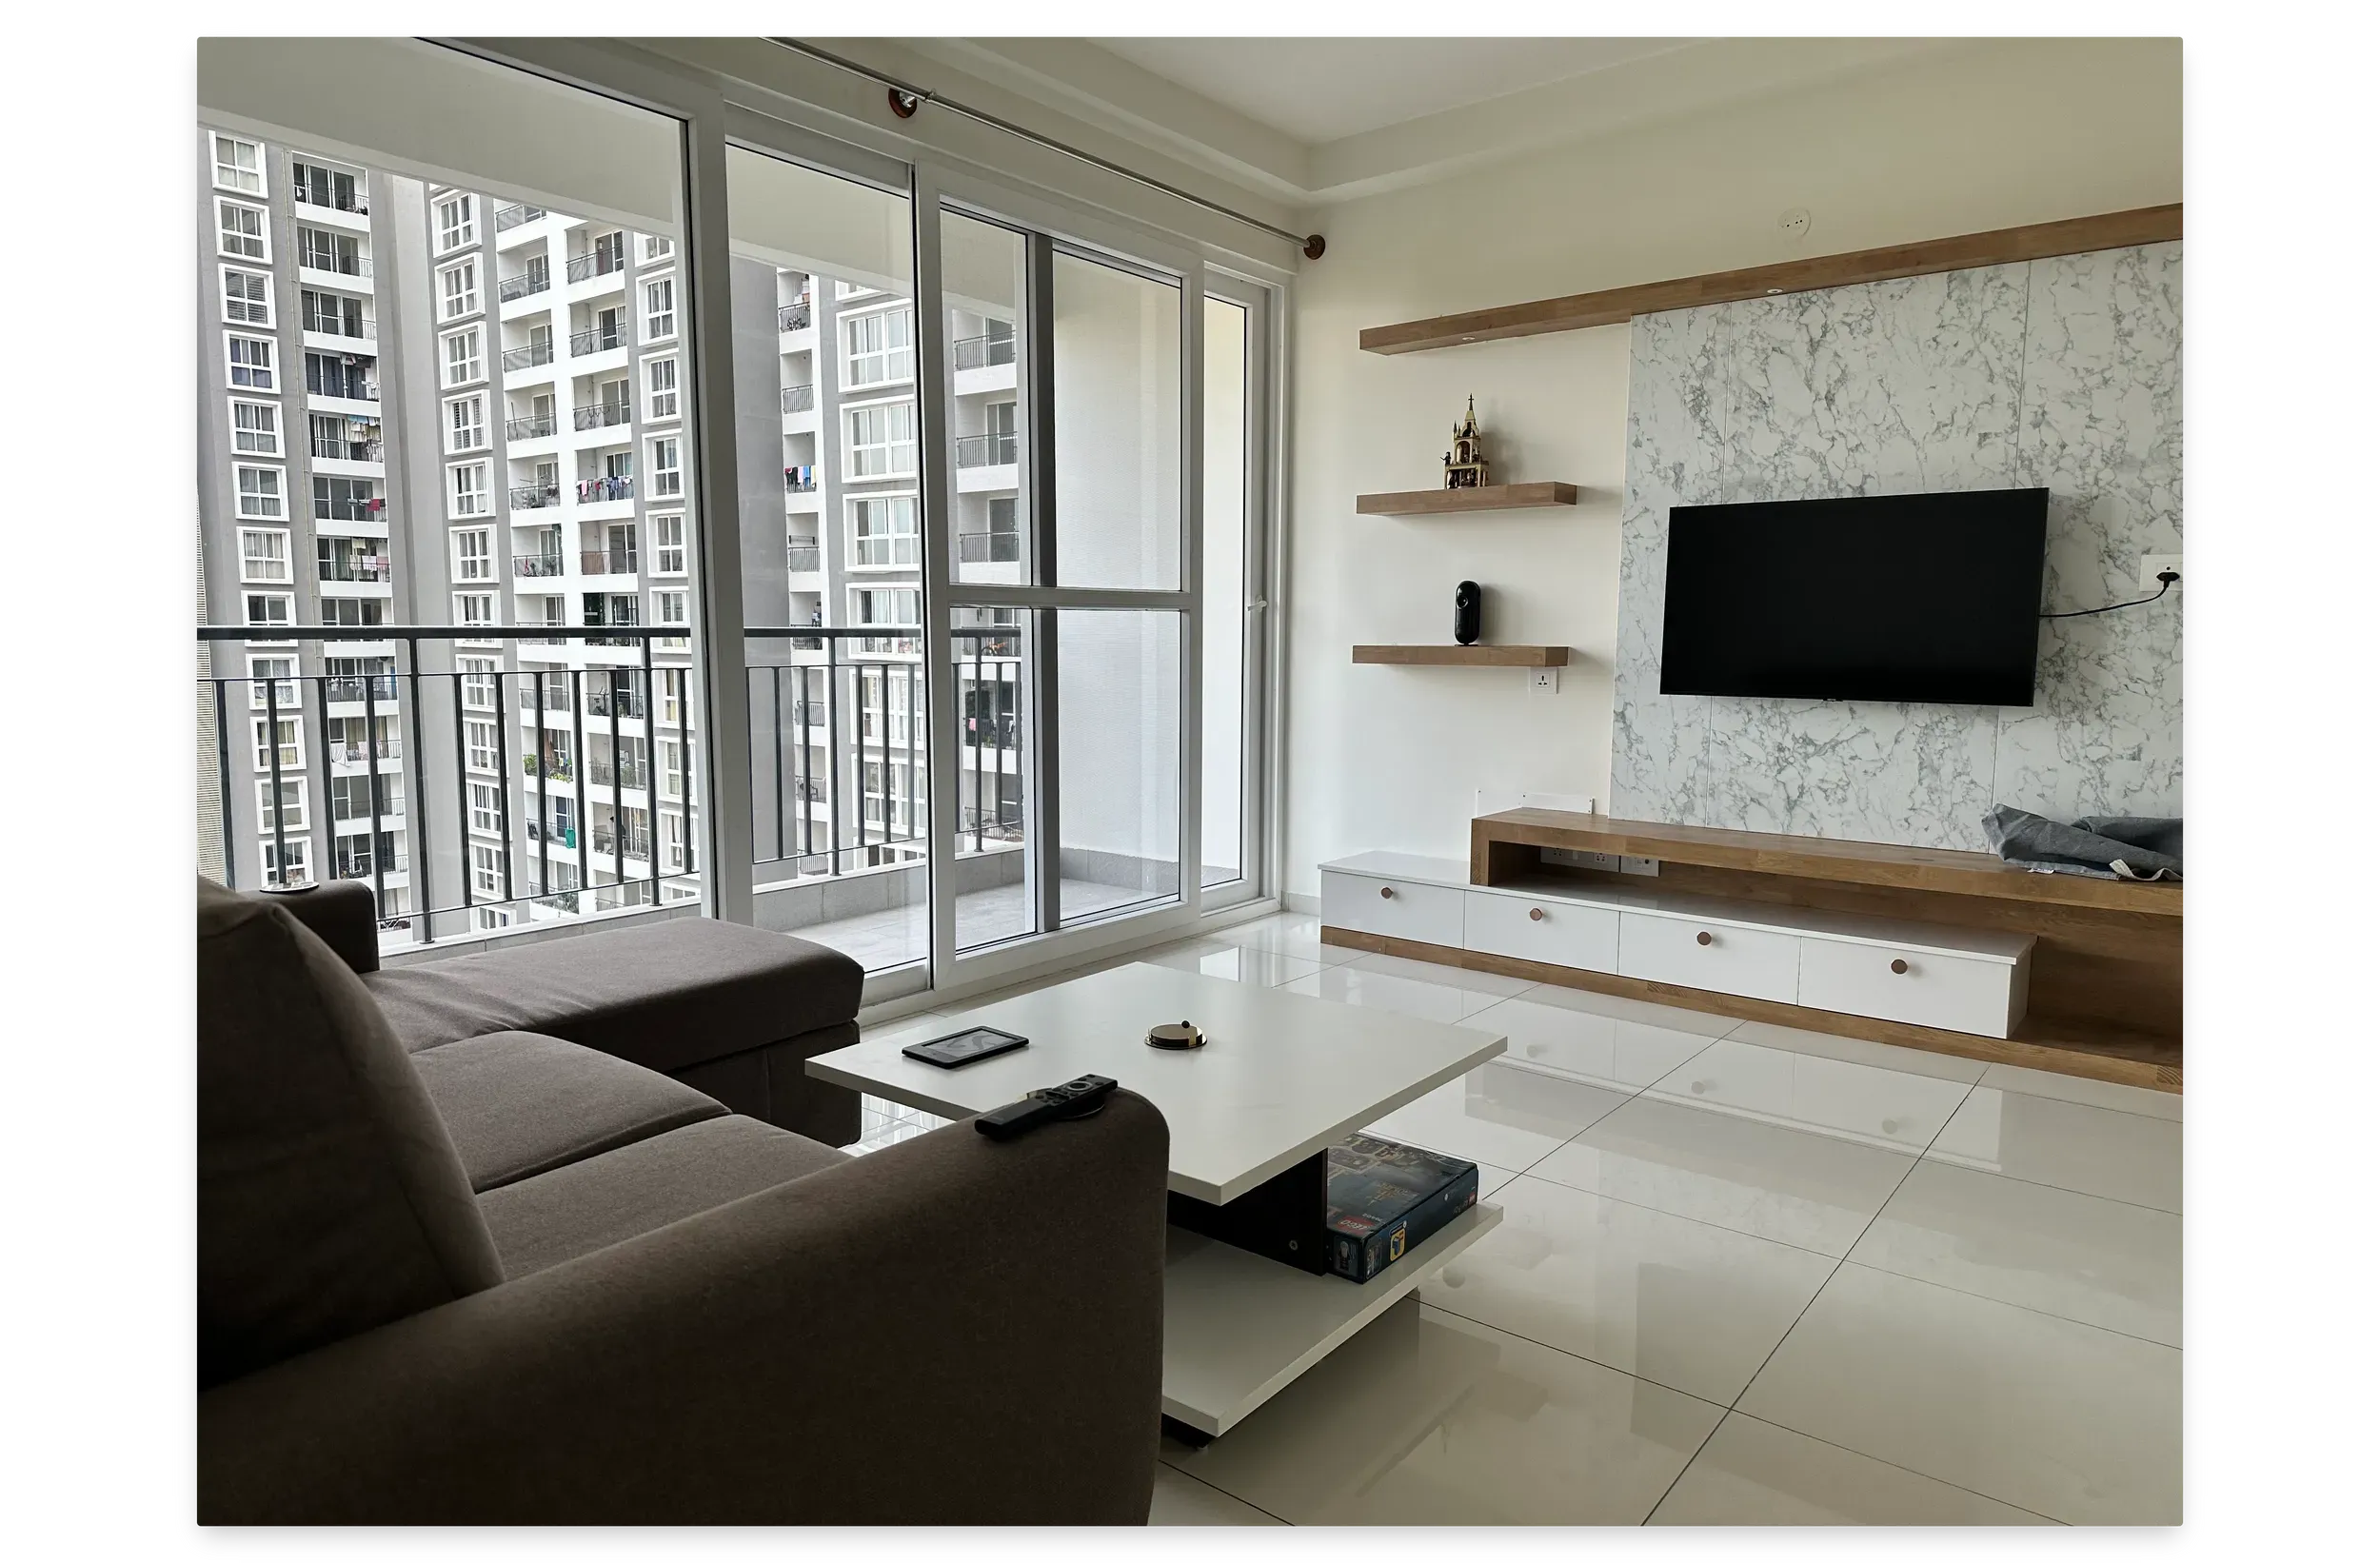 New Apartment| @ishandeveloper | Ishan Sharma